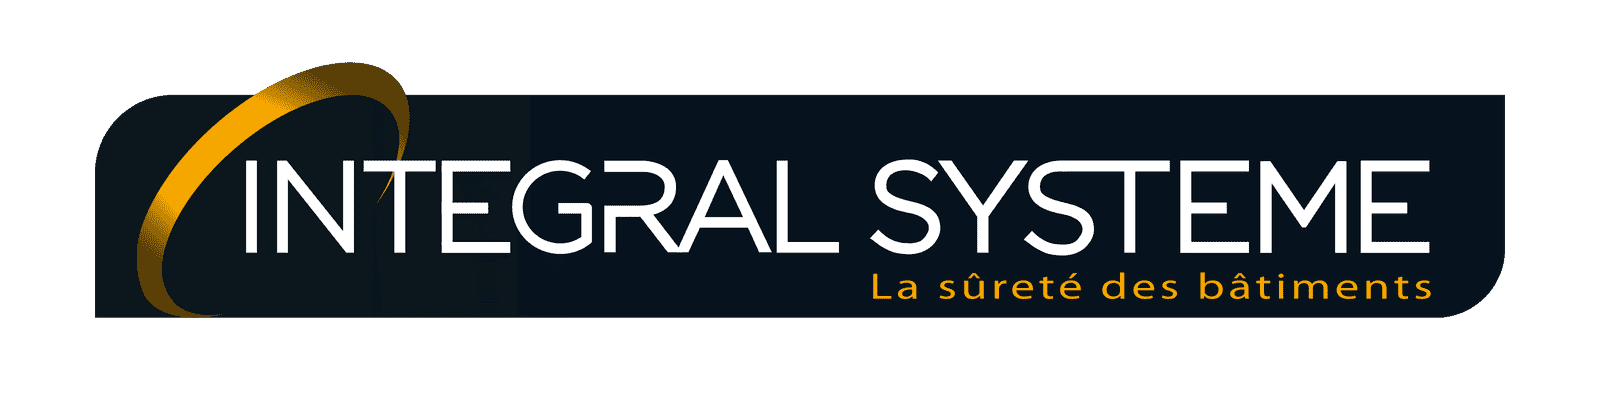 logo intégral système